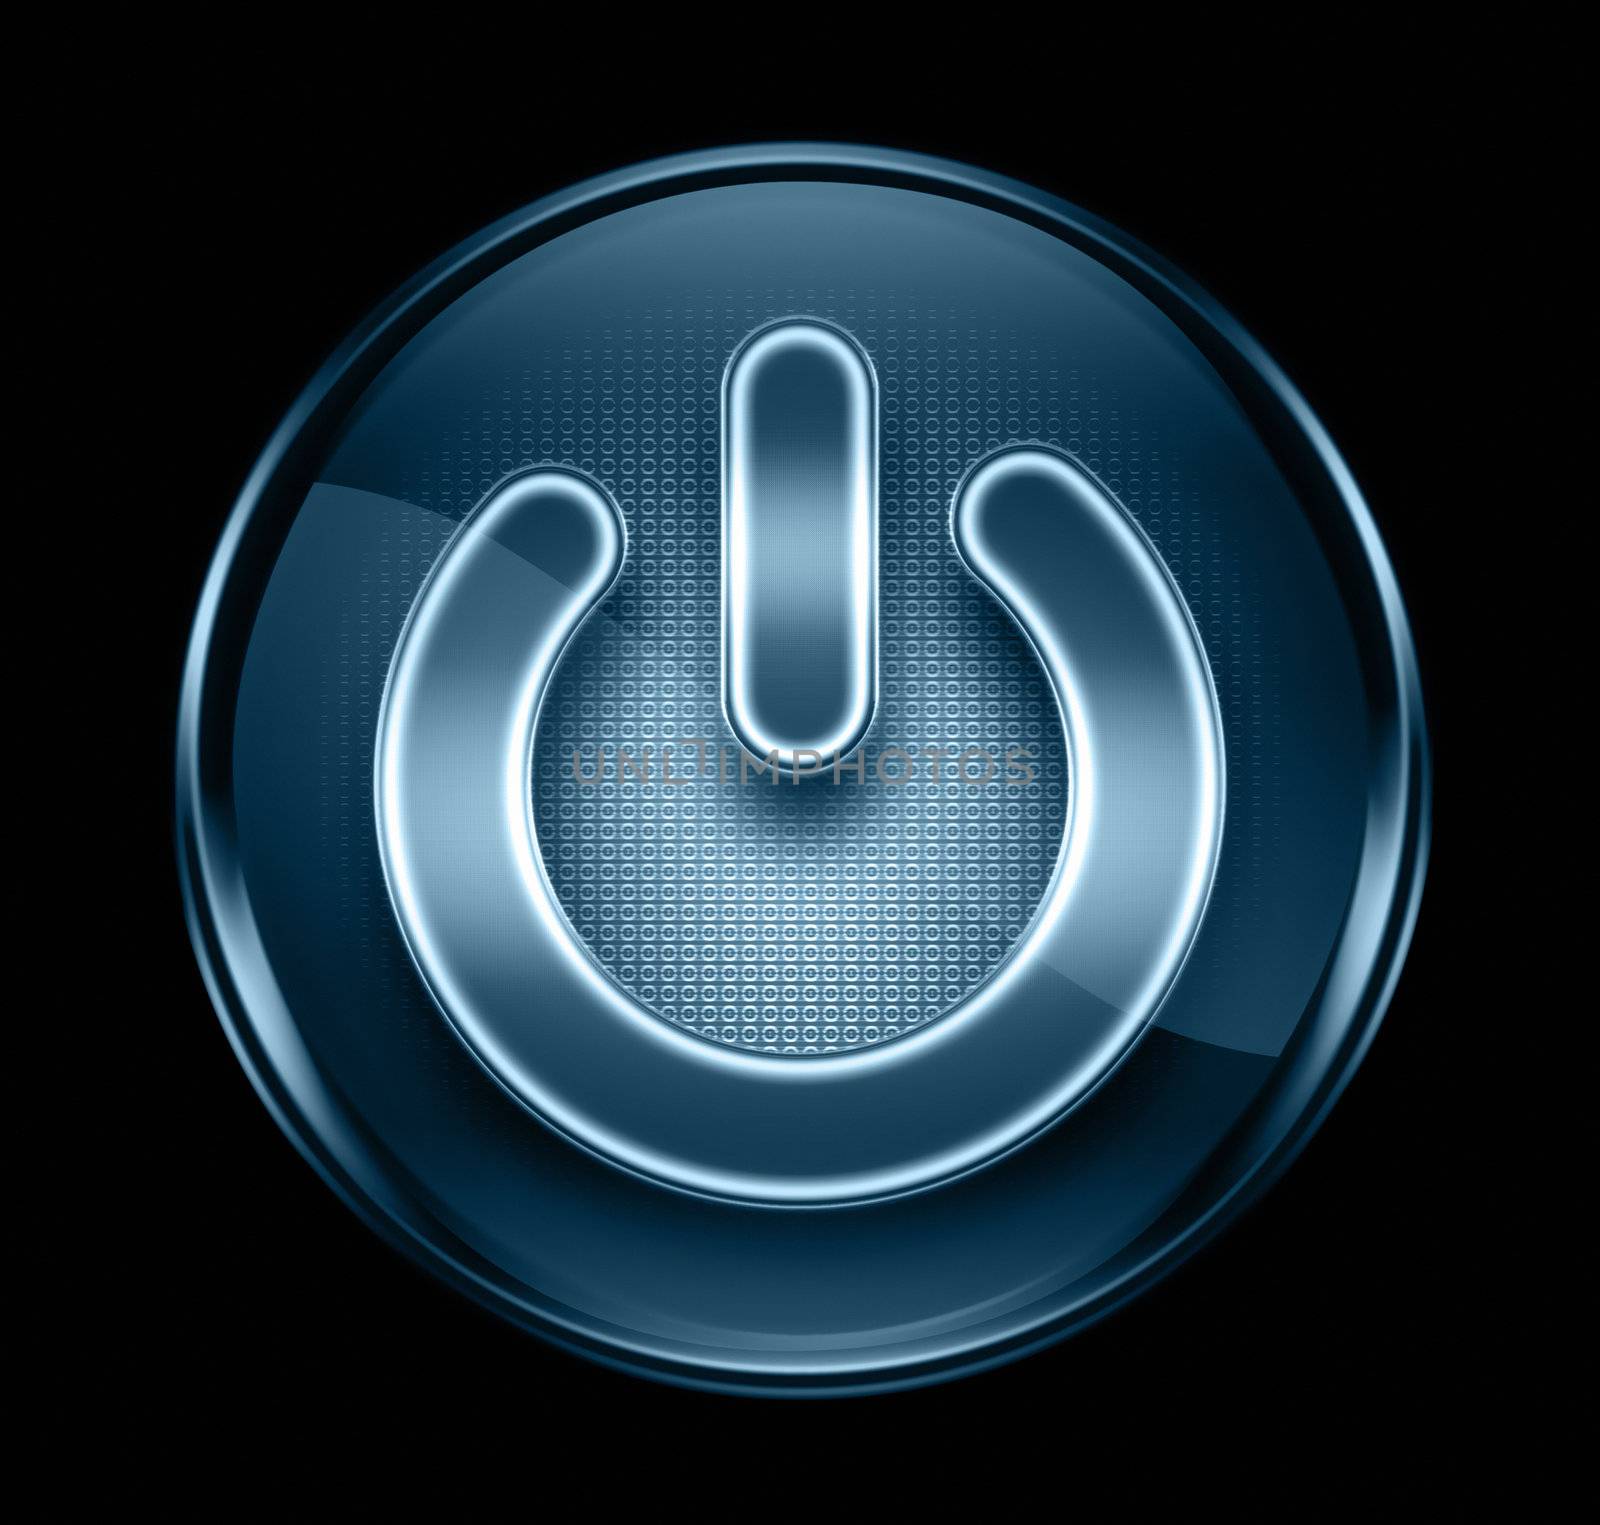 power button icon dark blue, isolated on black by zeffss